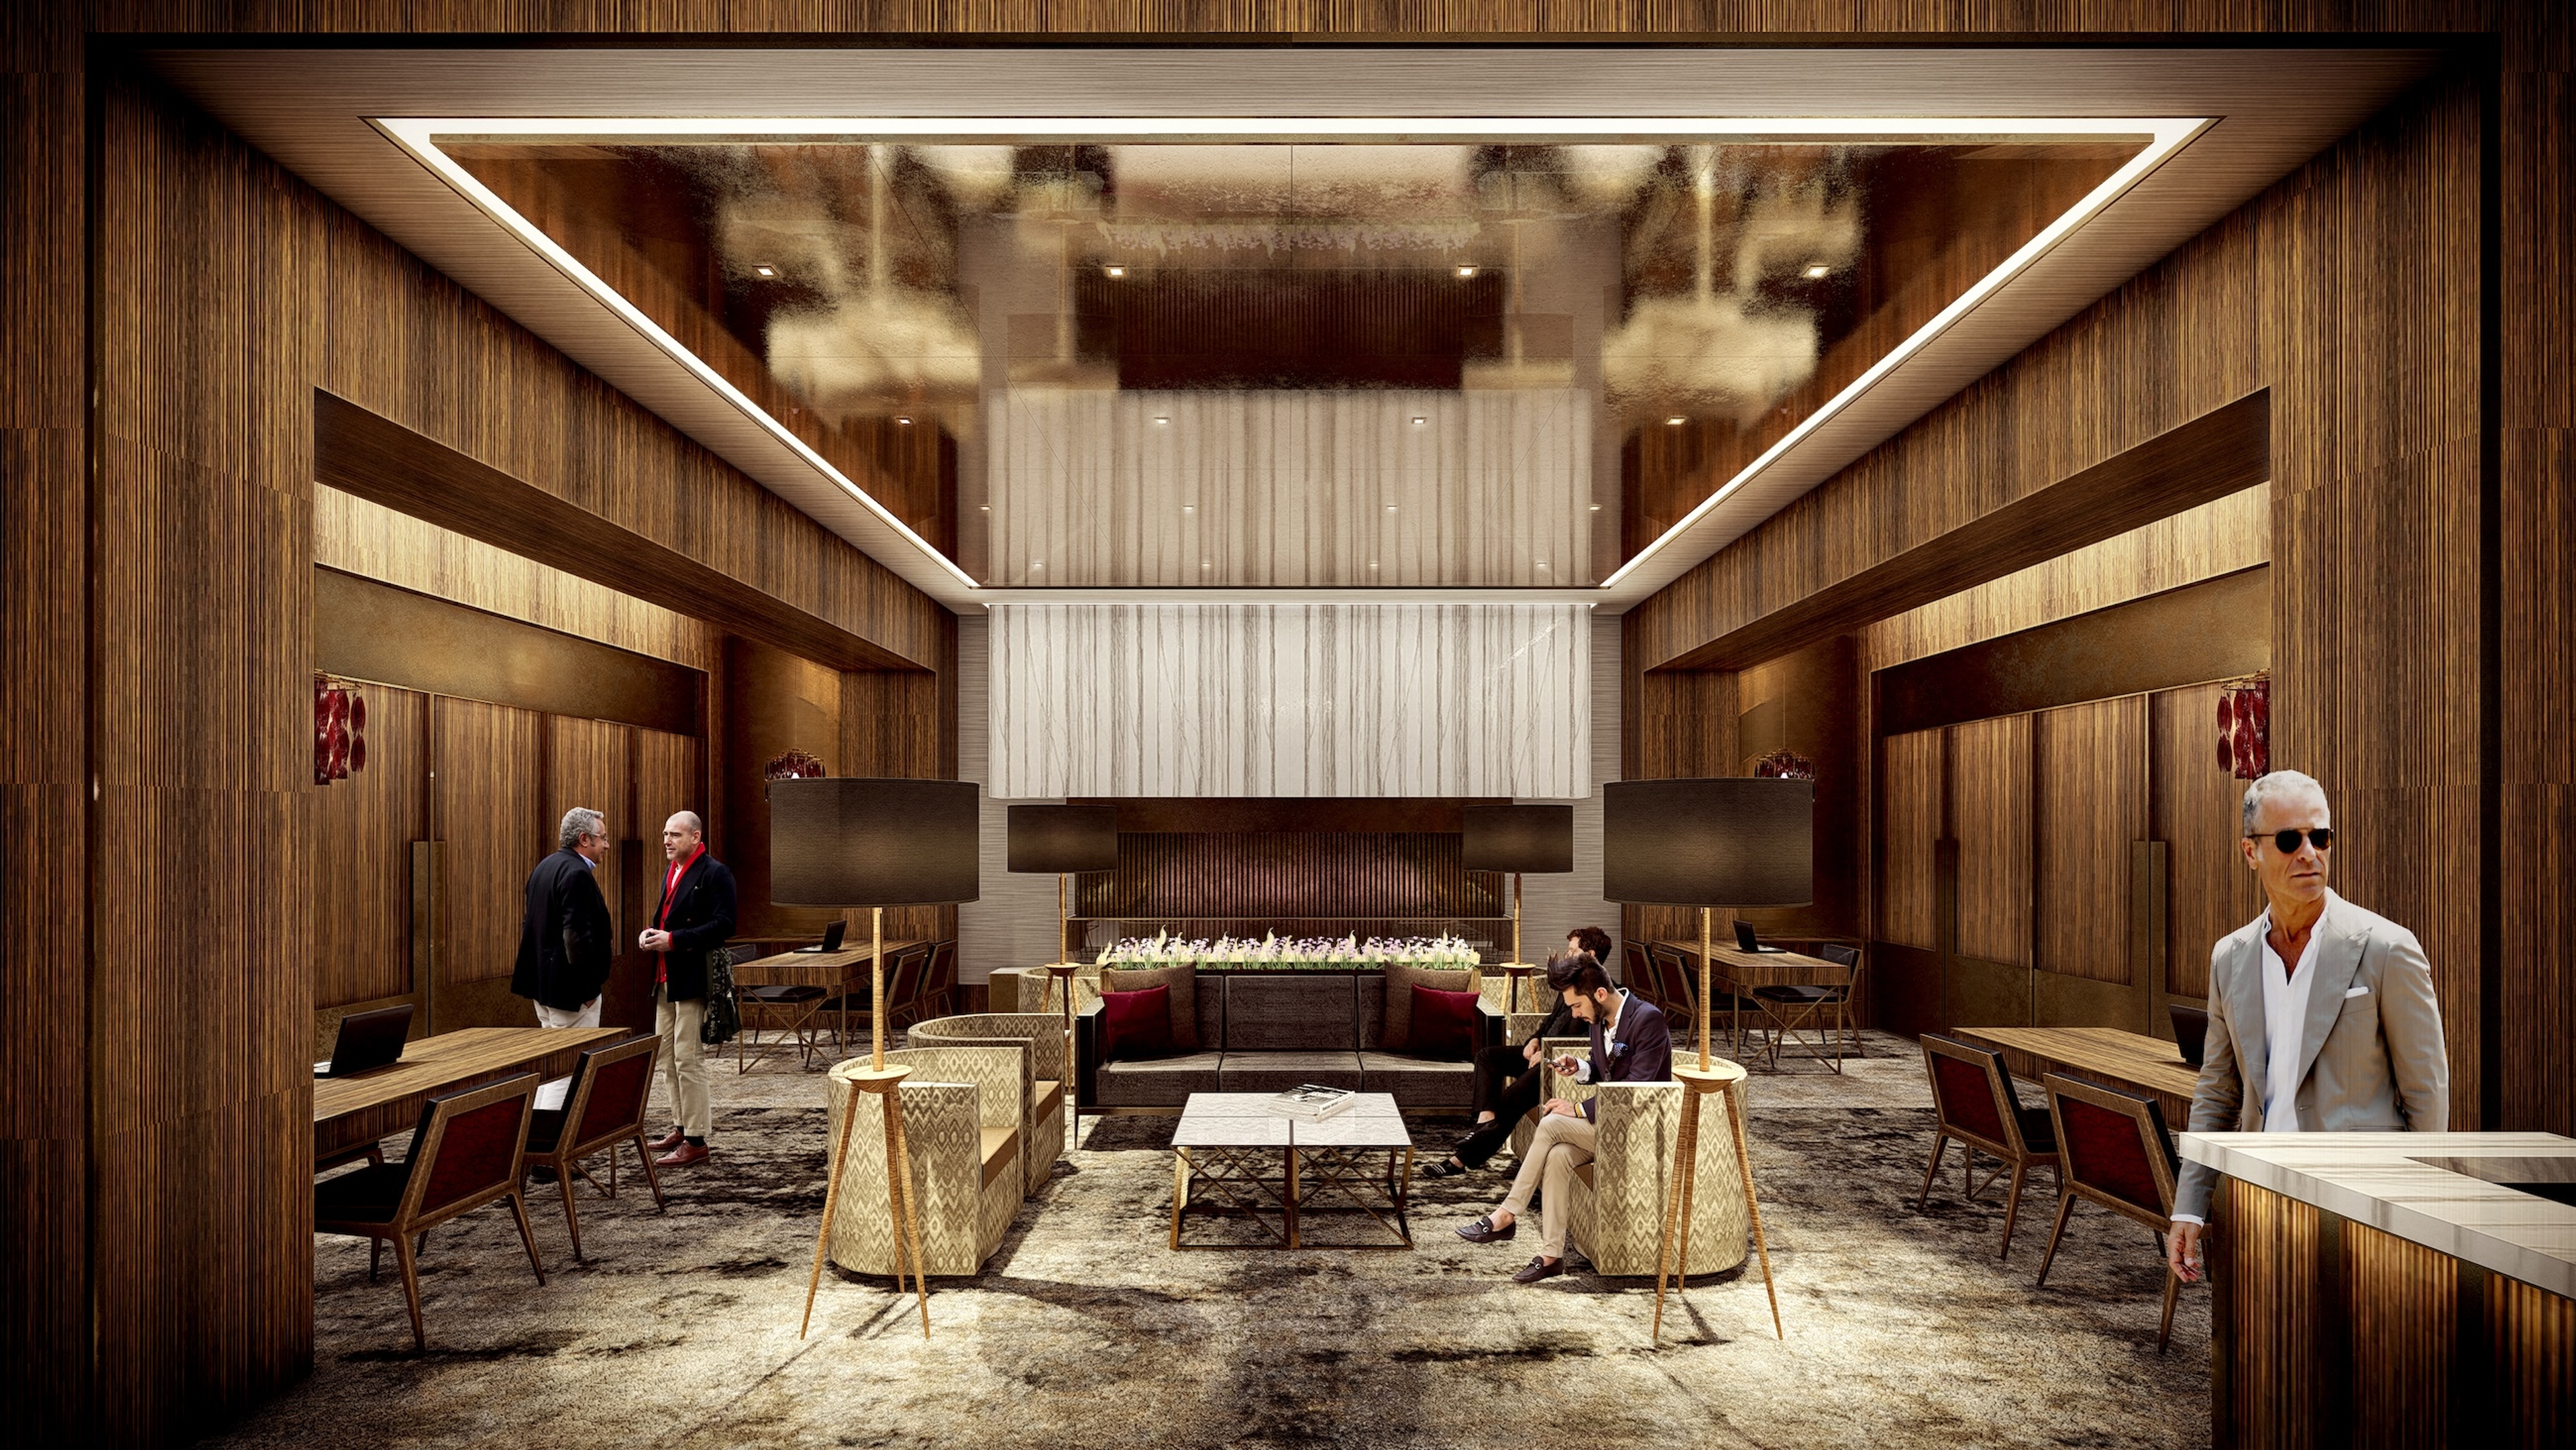 MGM ARIA Concierge Lounge